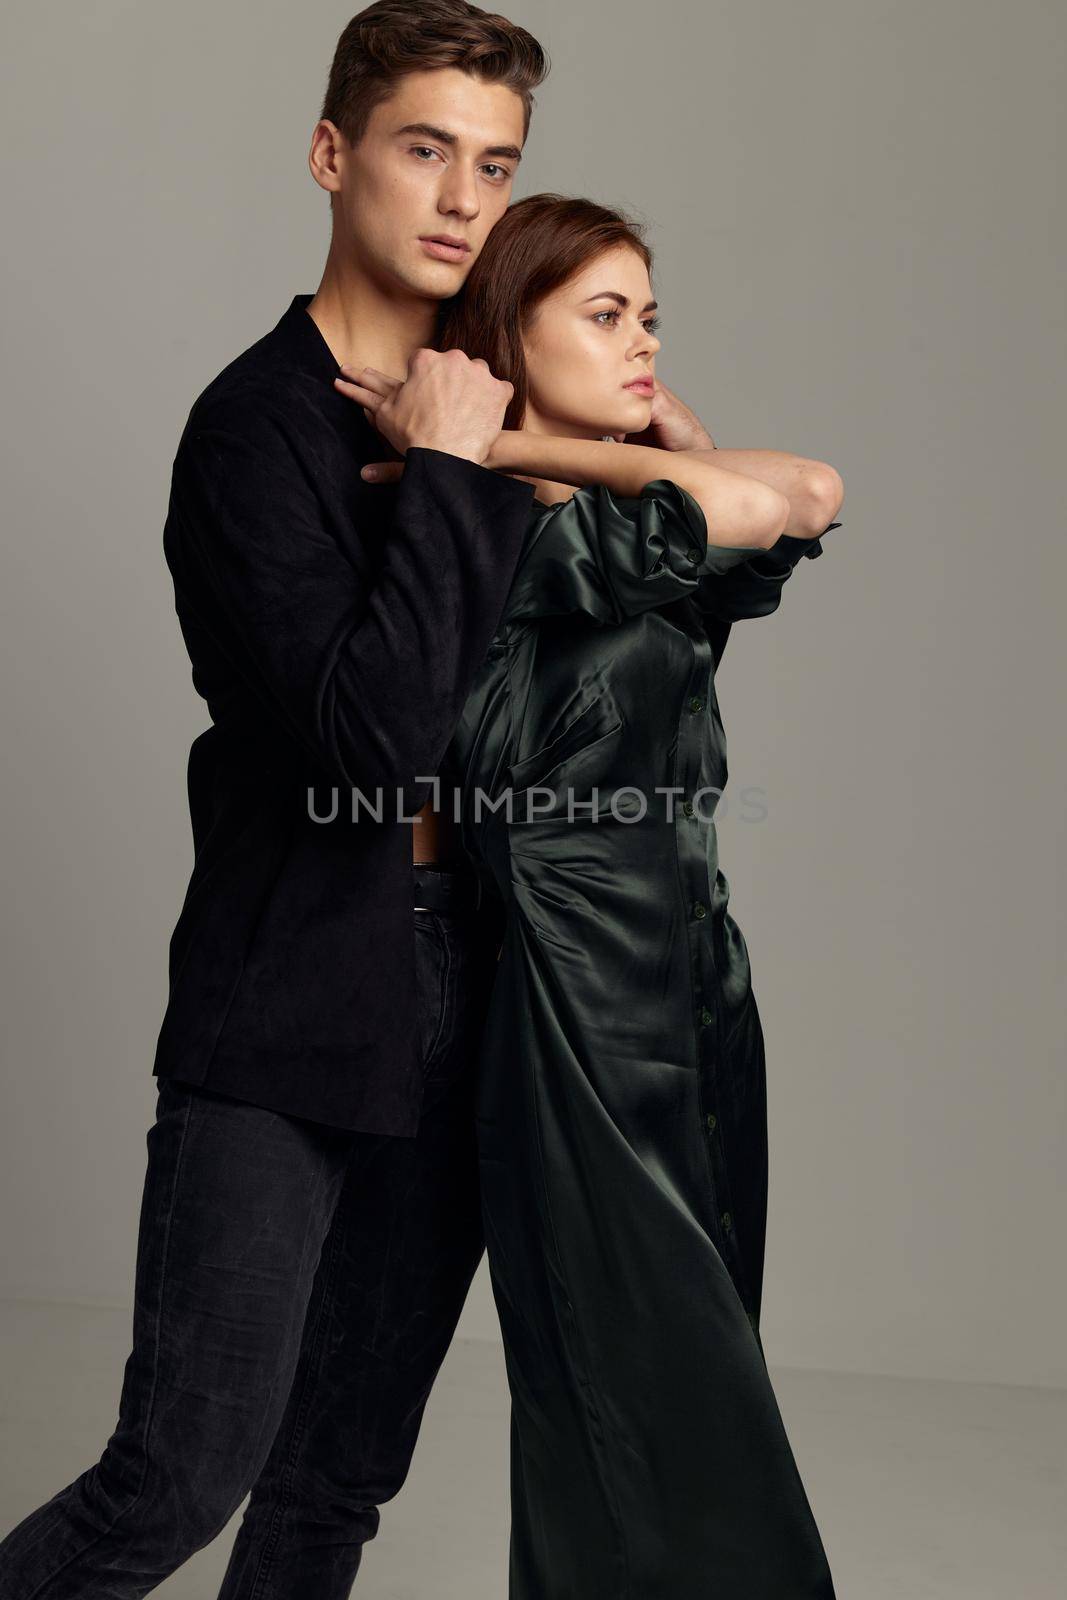 cute man and woman hugs Studio Sensual style intimacy. High quality photo